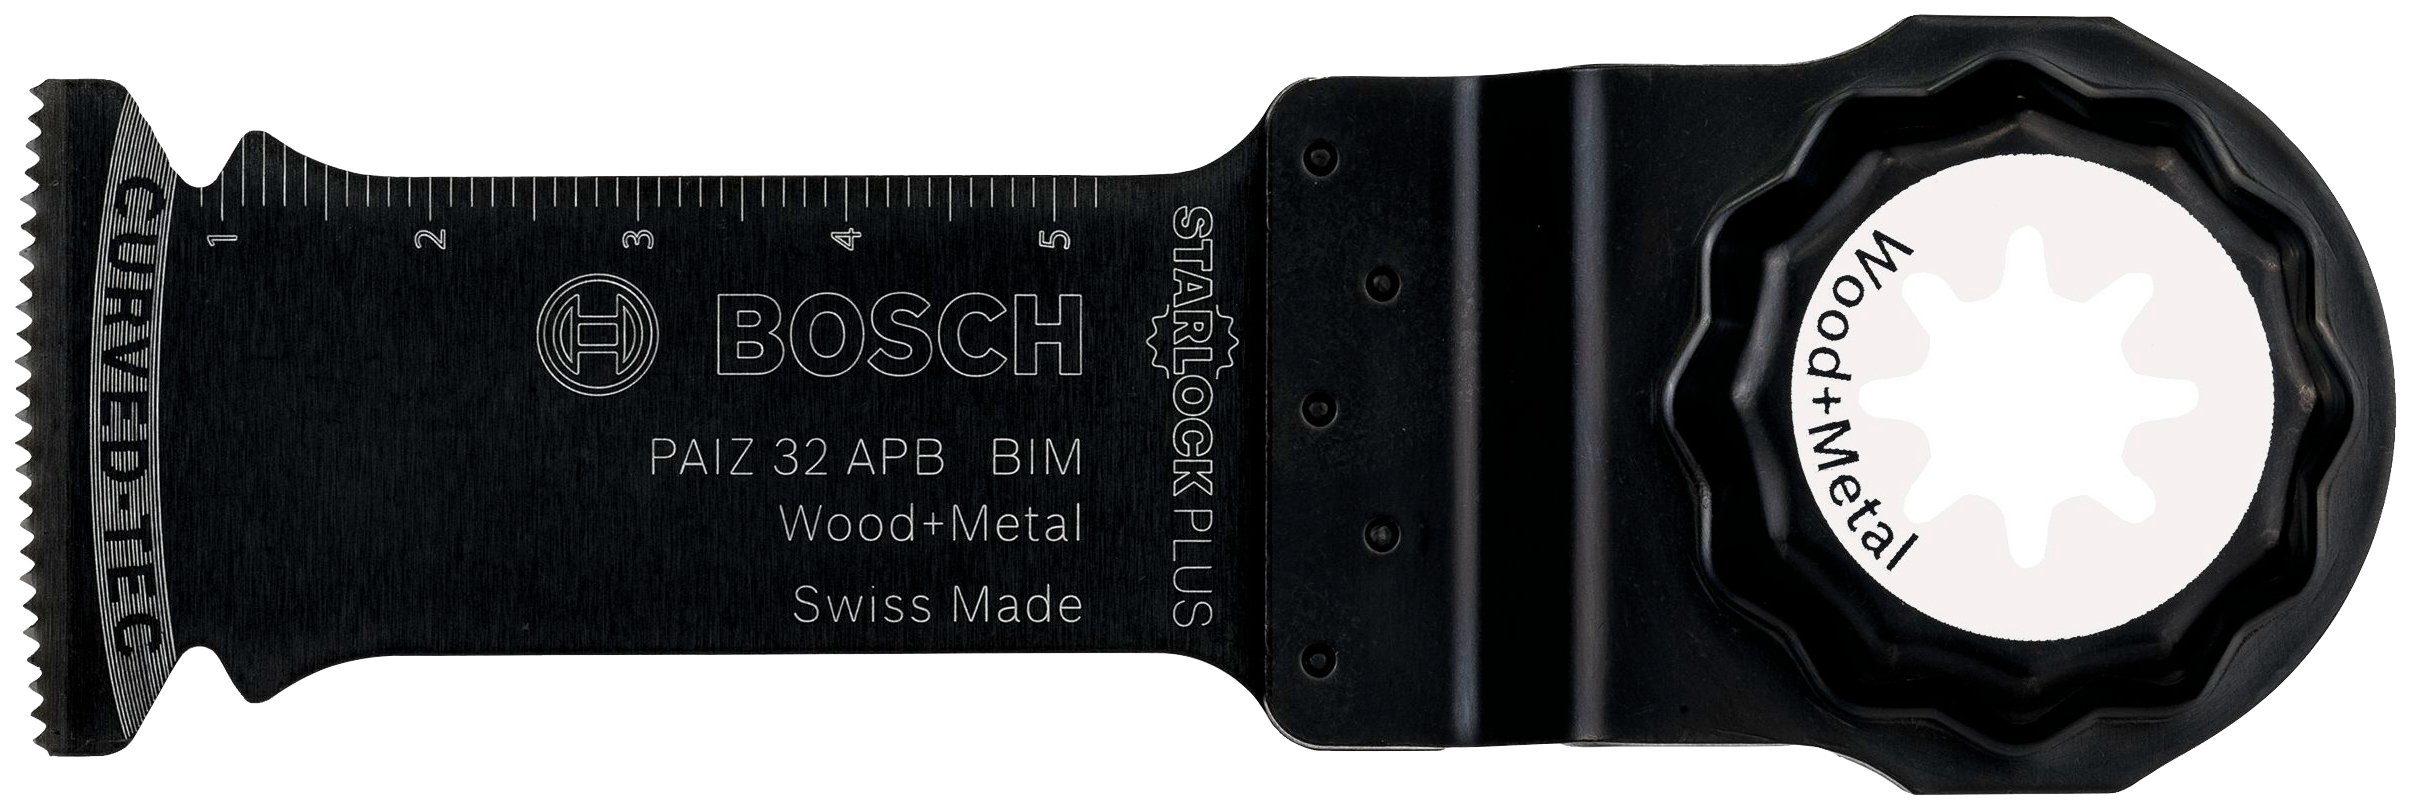 32 APB RB Professional Tauchsägeblatt PAIZ32 x Bosch mm 60 (10-St)